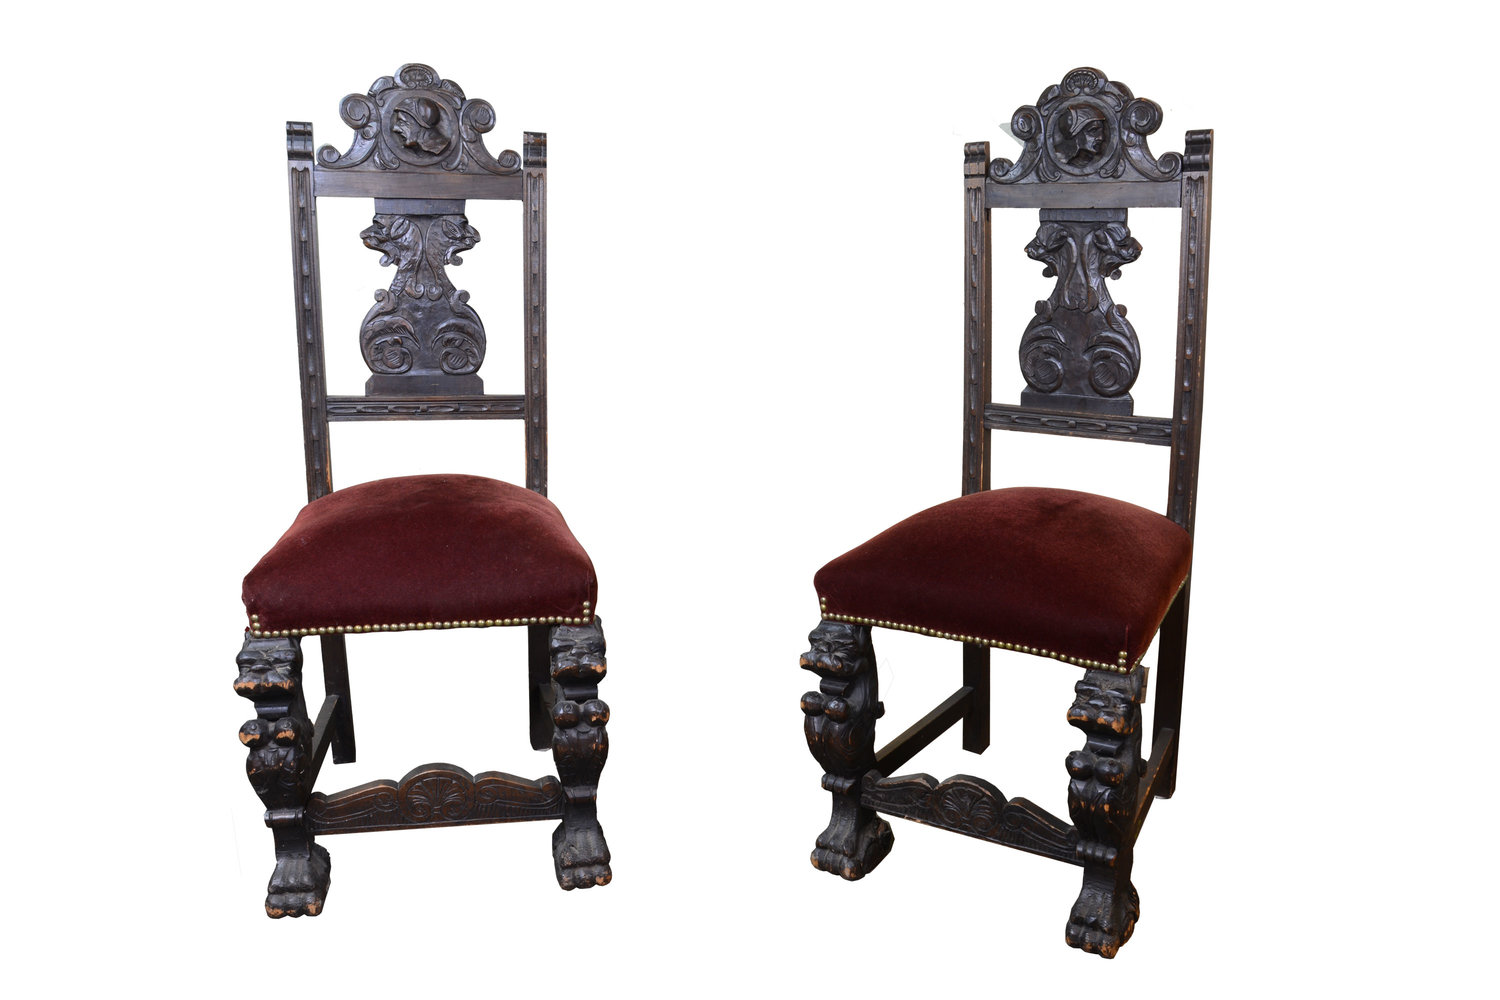 46908-carved-chair-set-MAIN.jpg